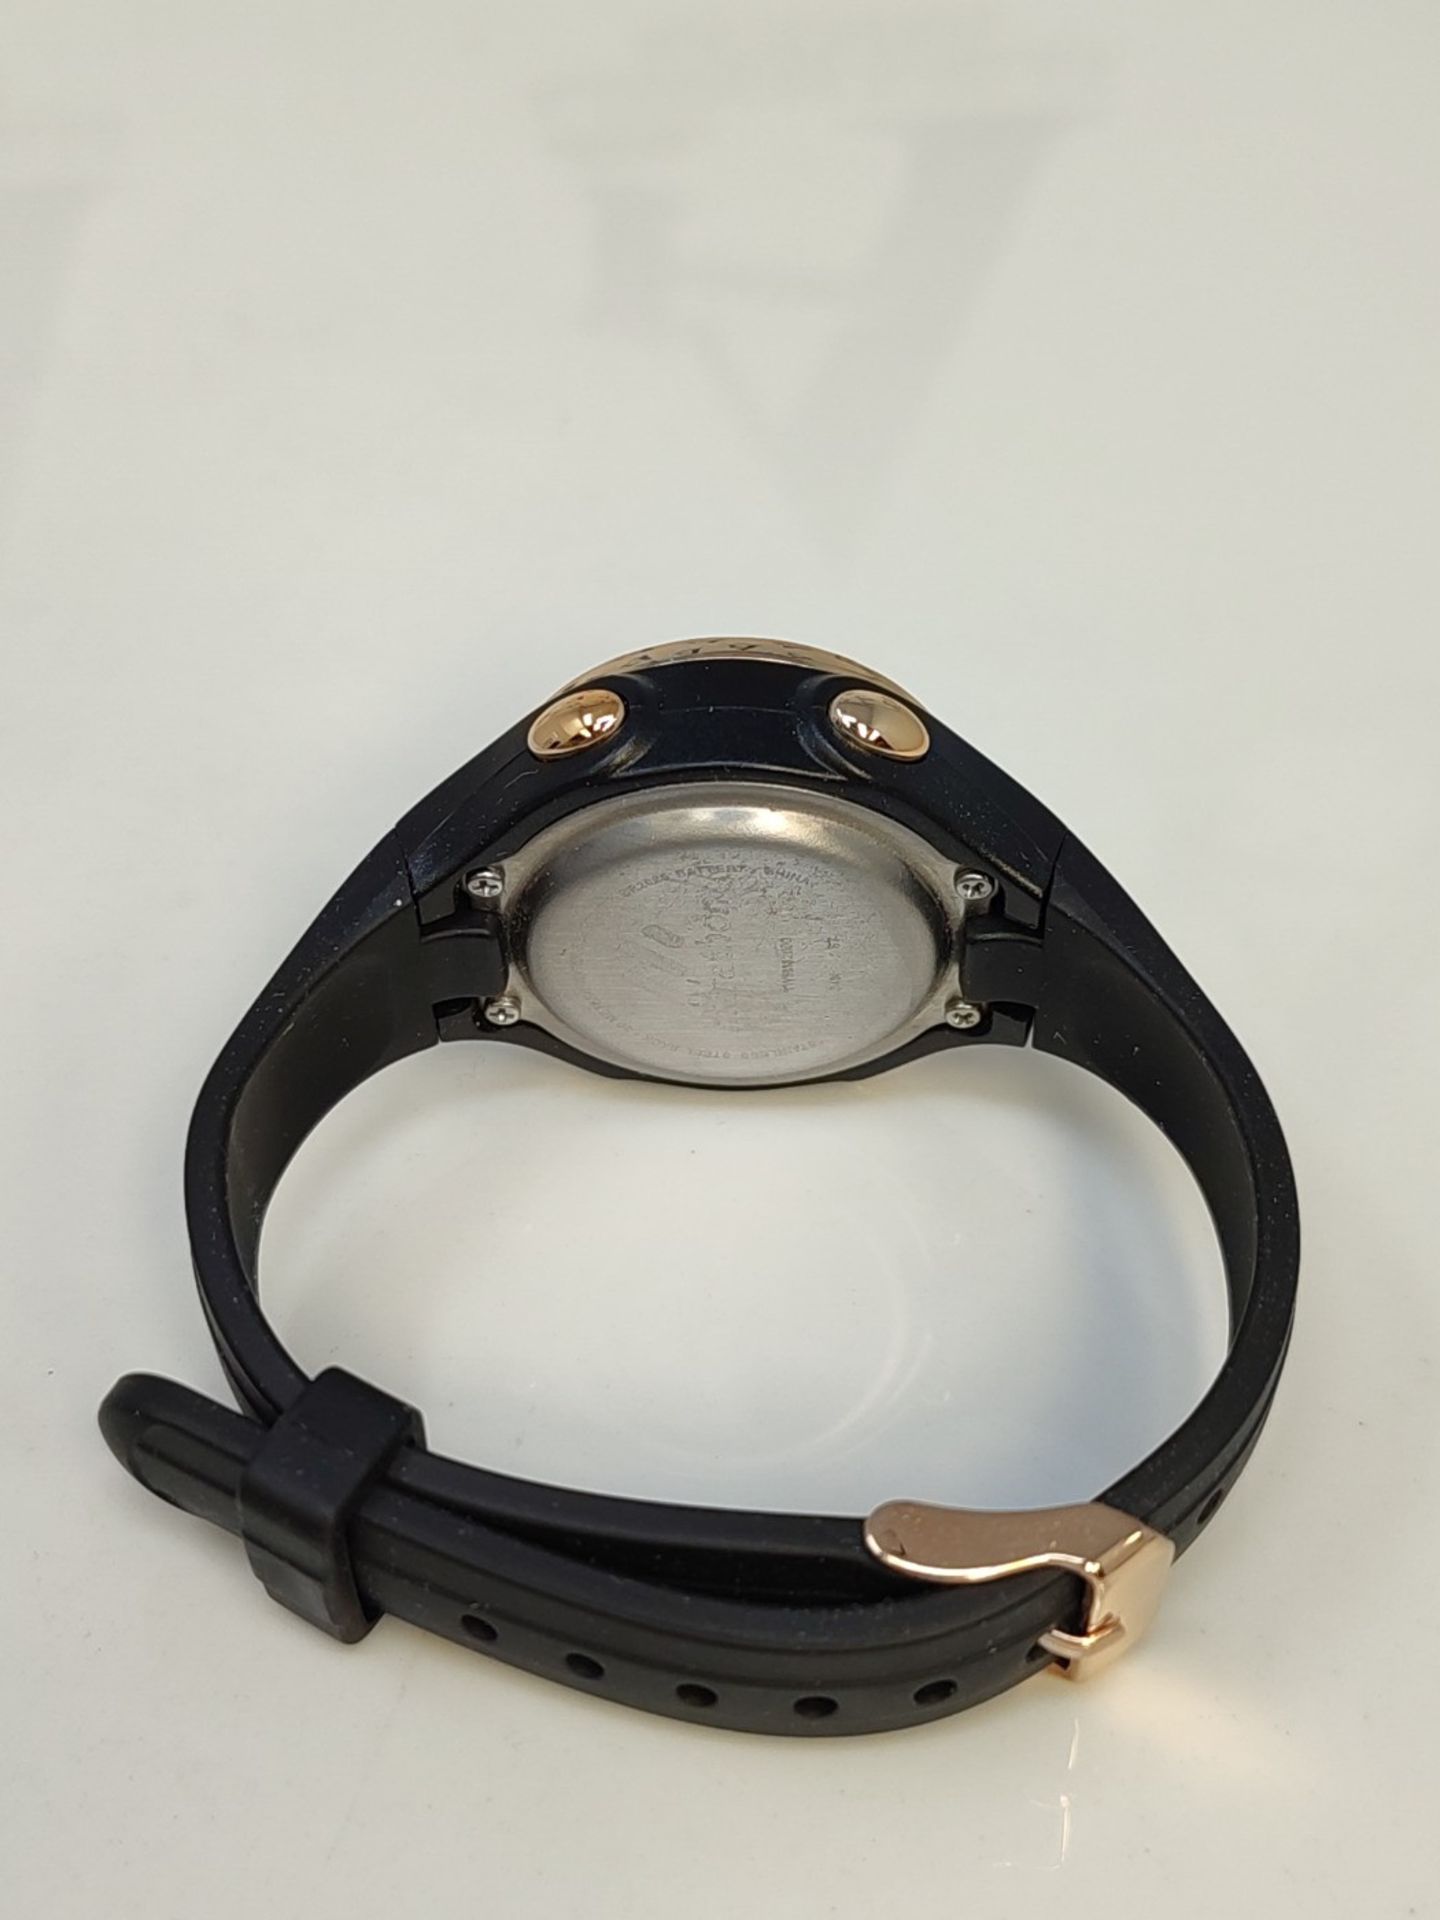 Timex Women's Digital Mechanical Watch with Resin Bracelet TW5M32800 - Image 6 of 6